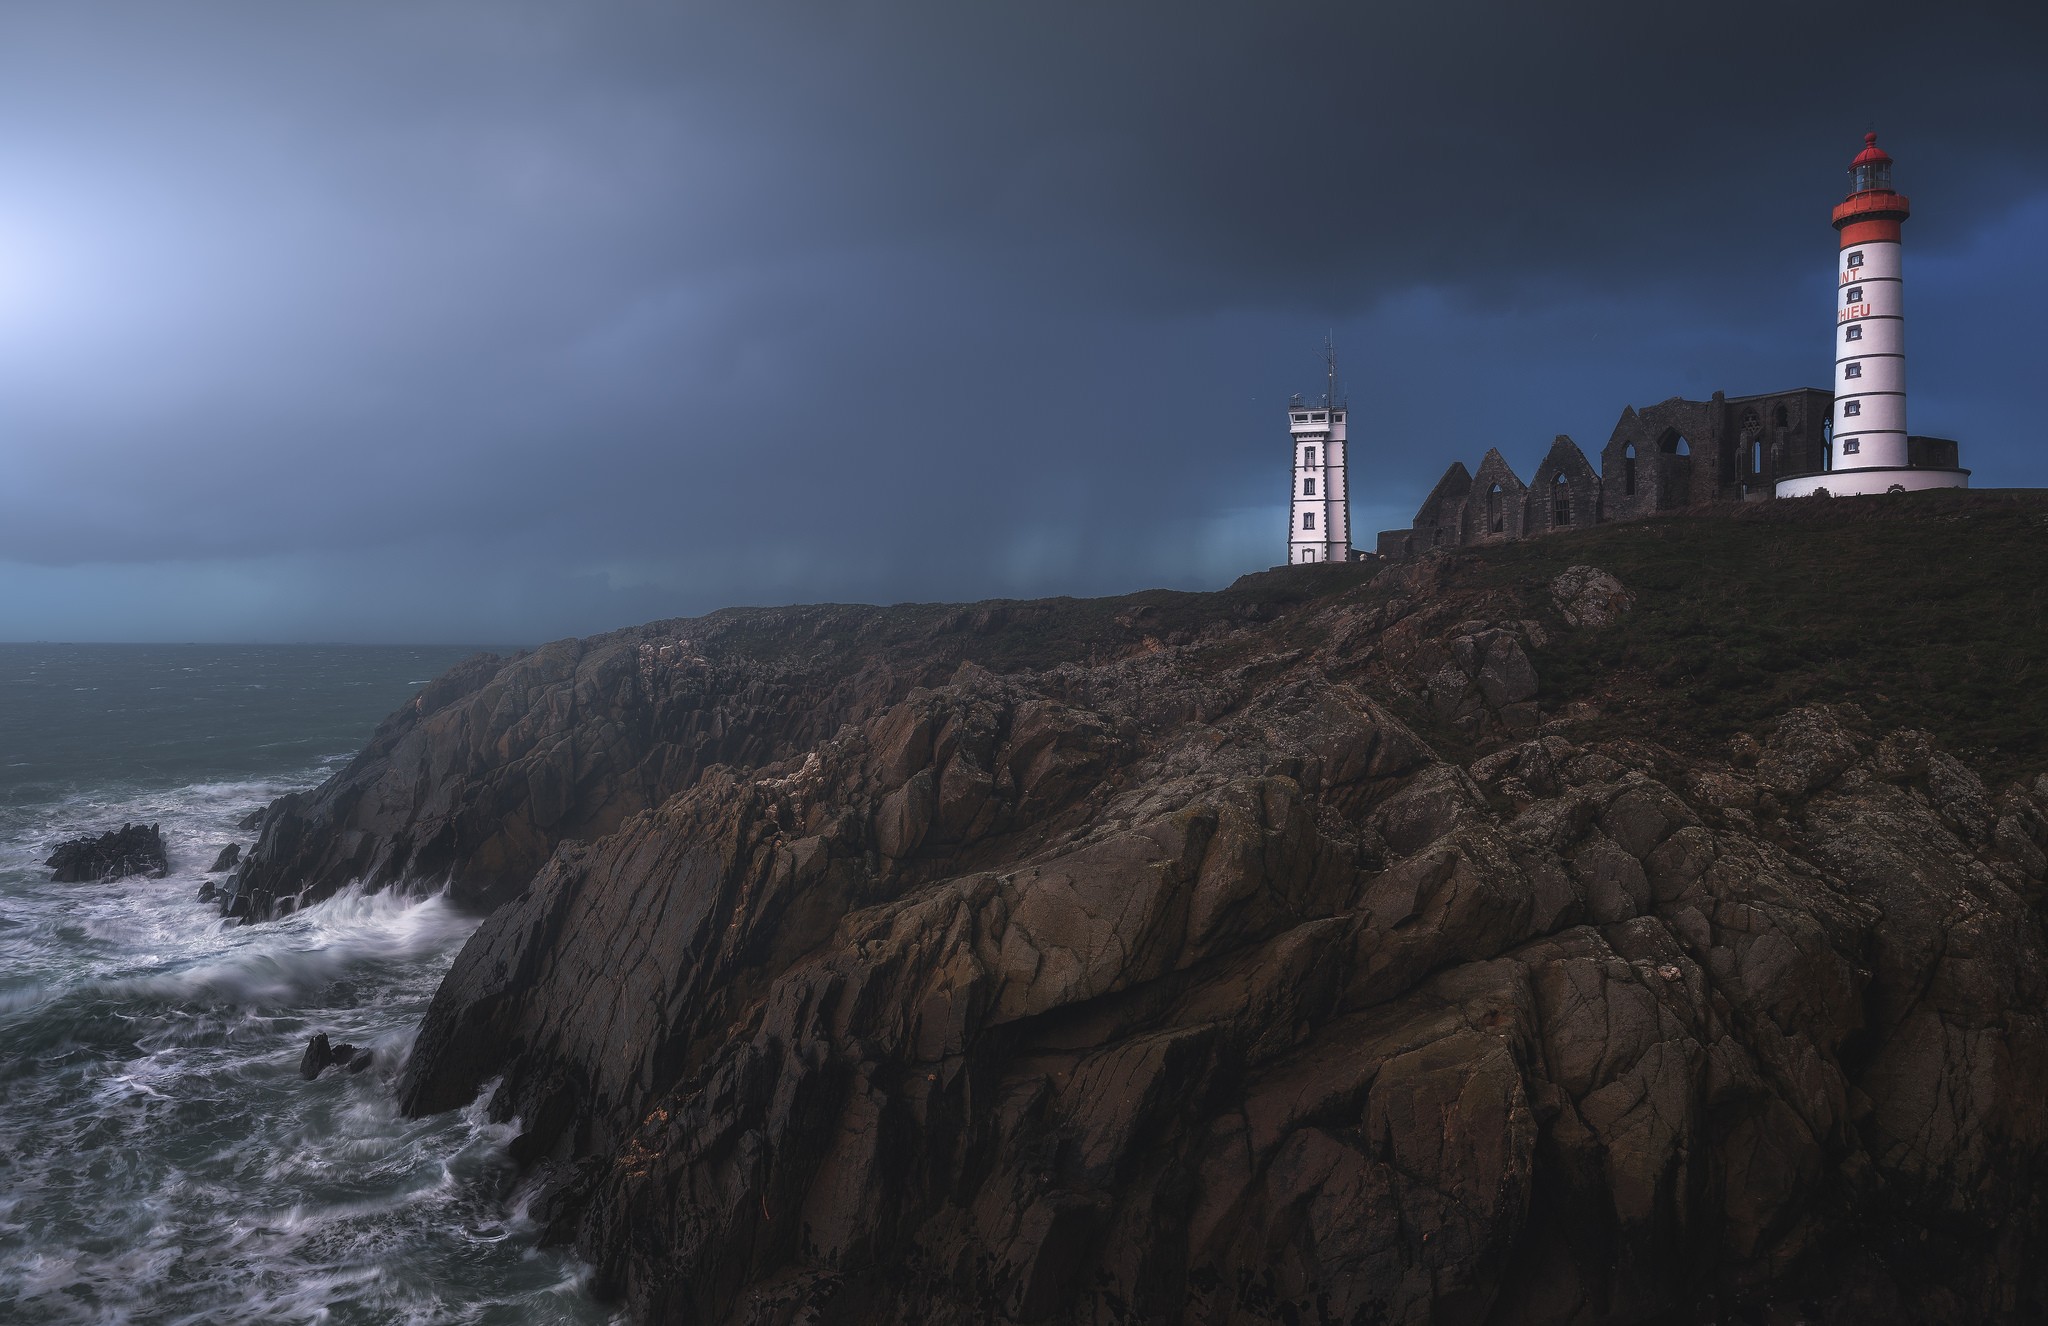 General 2048x1326 nature landscape lighthouse sea rocks water coast Observation Tower